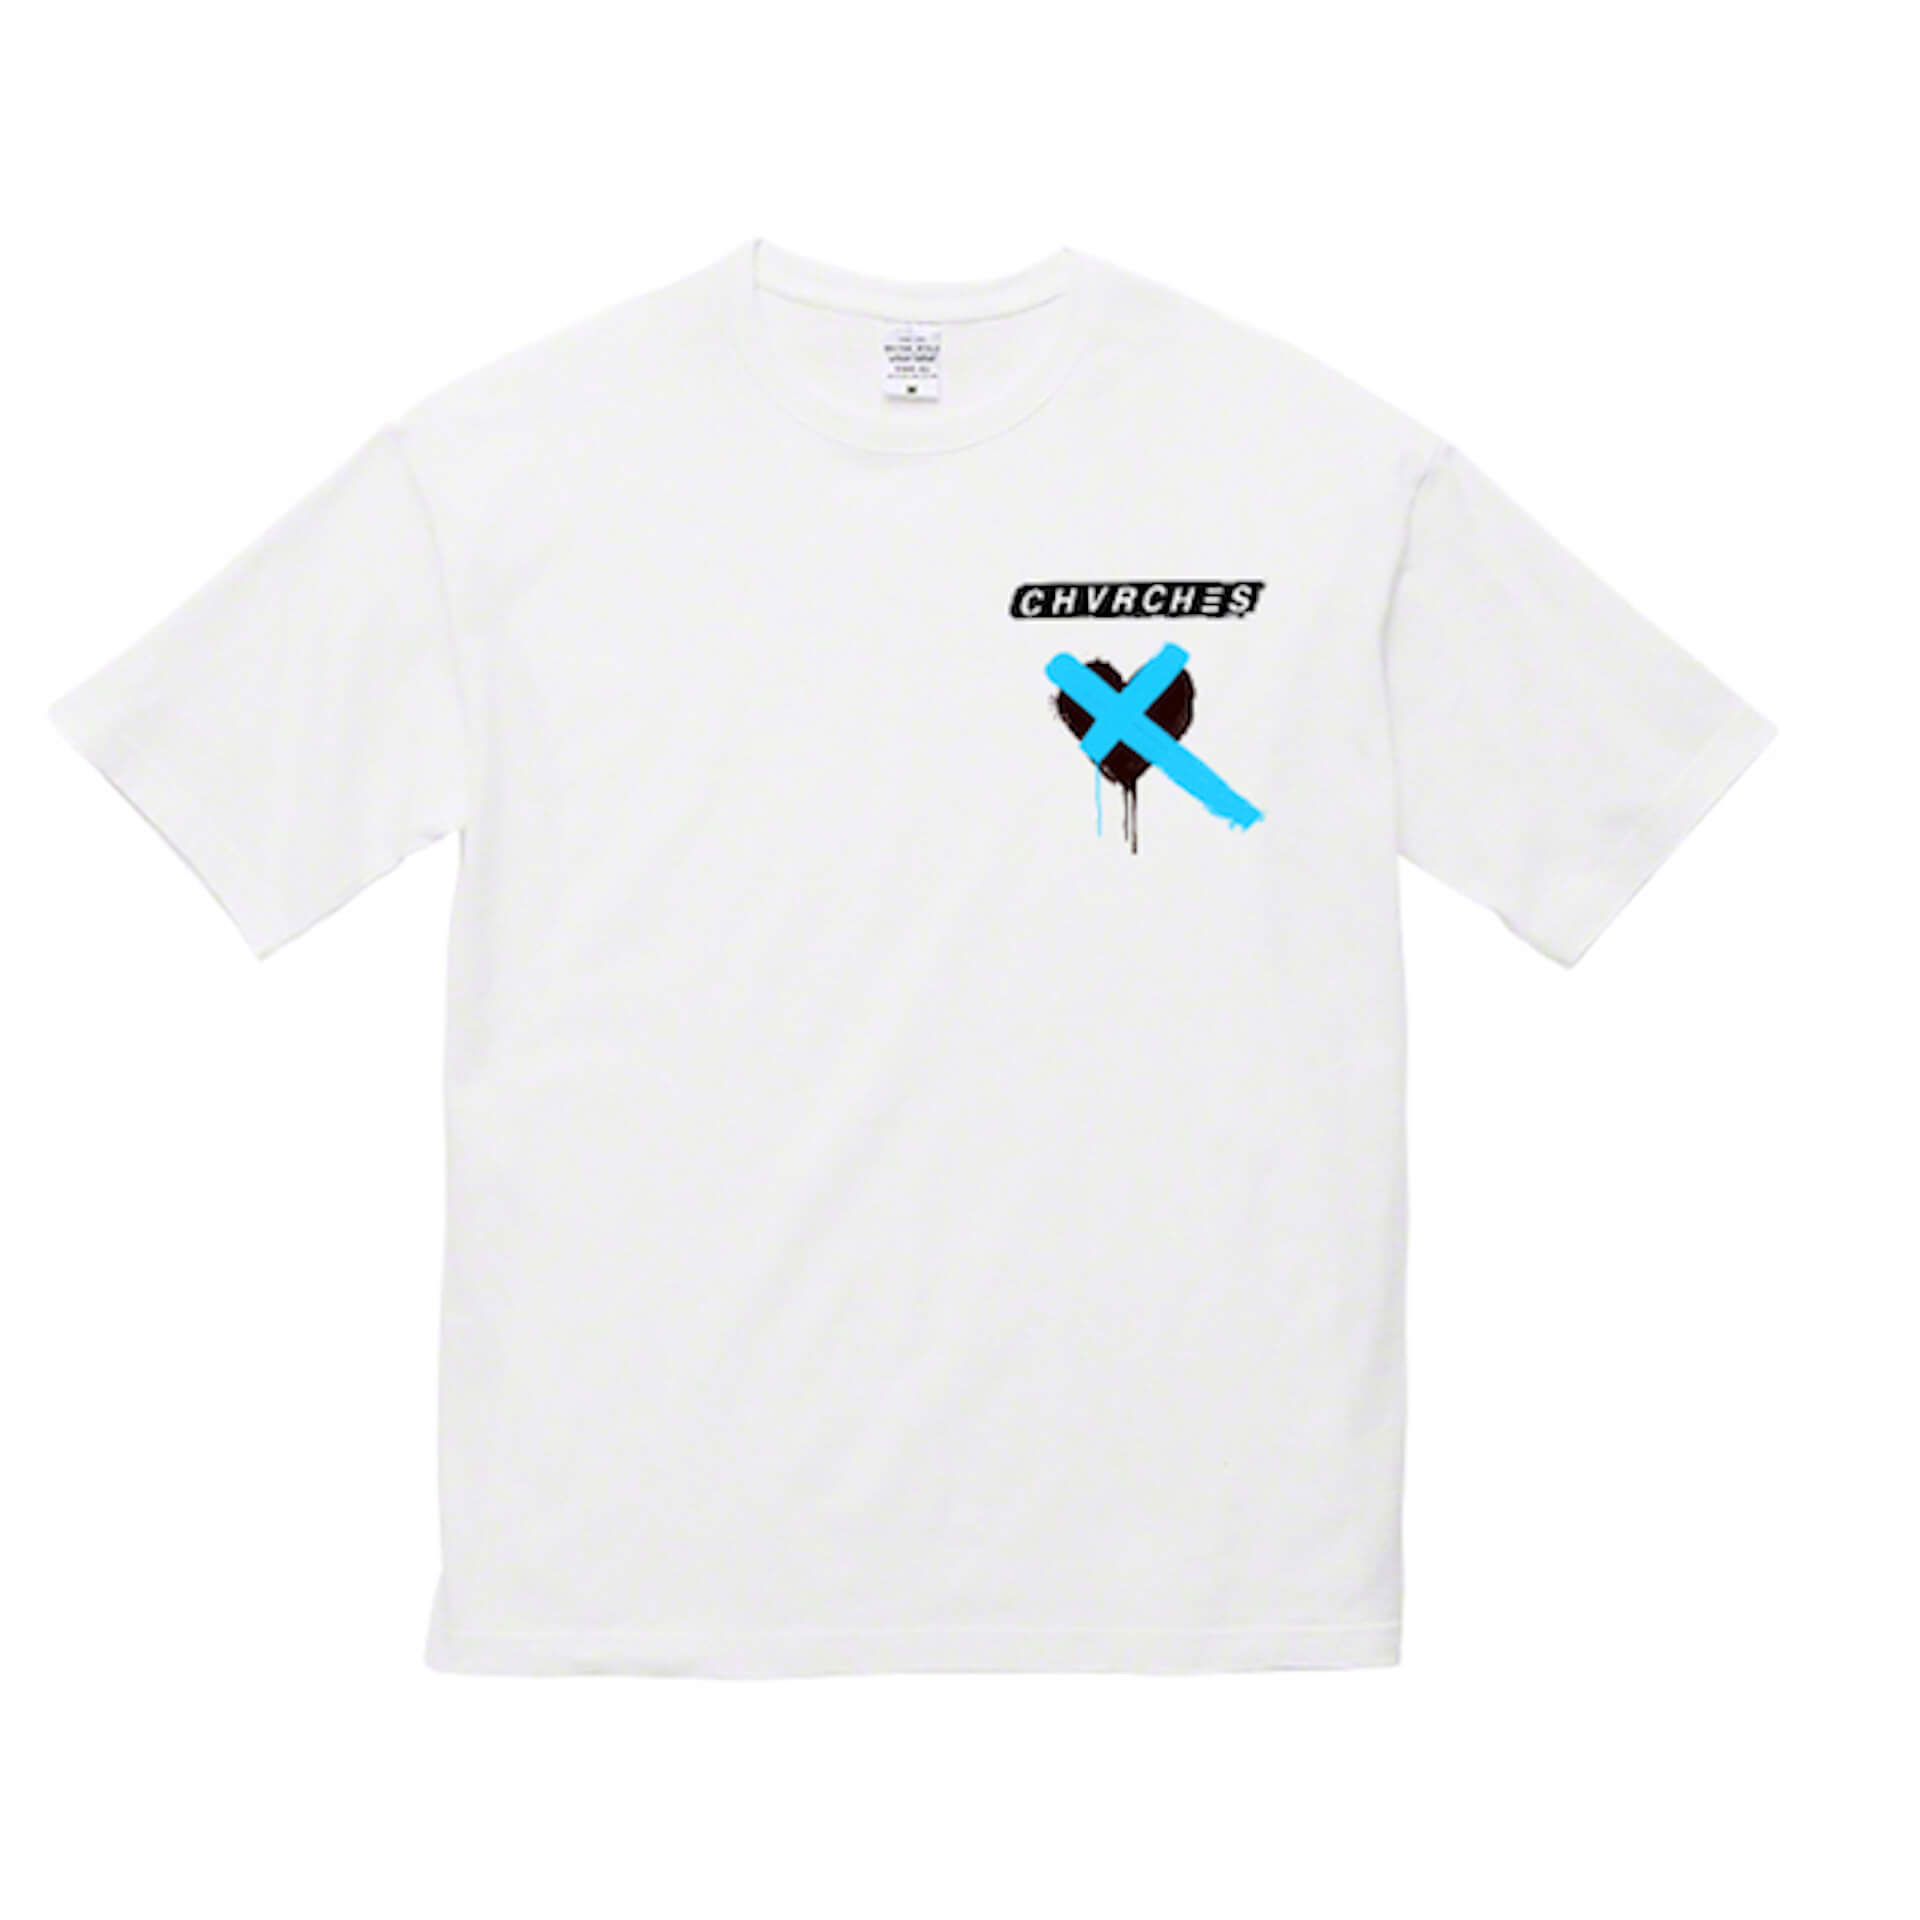 CHVRCHESの日本限定TシャツがBEATINK公式サイトで受注受付開始！アルバムアートワークをあしらったデザイン music200722_chvrches_03